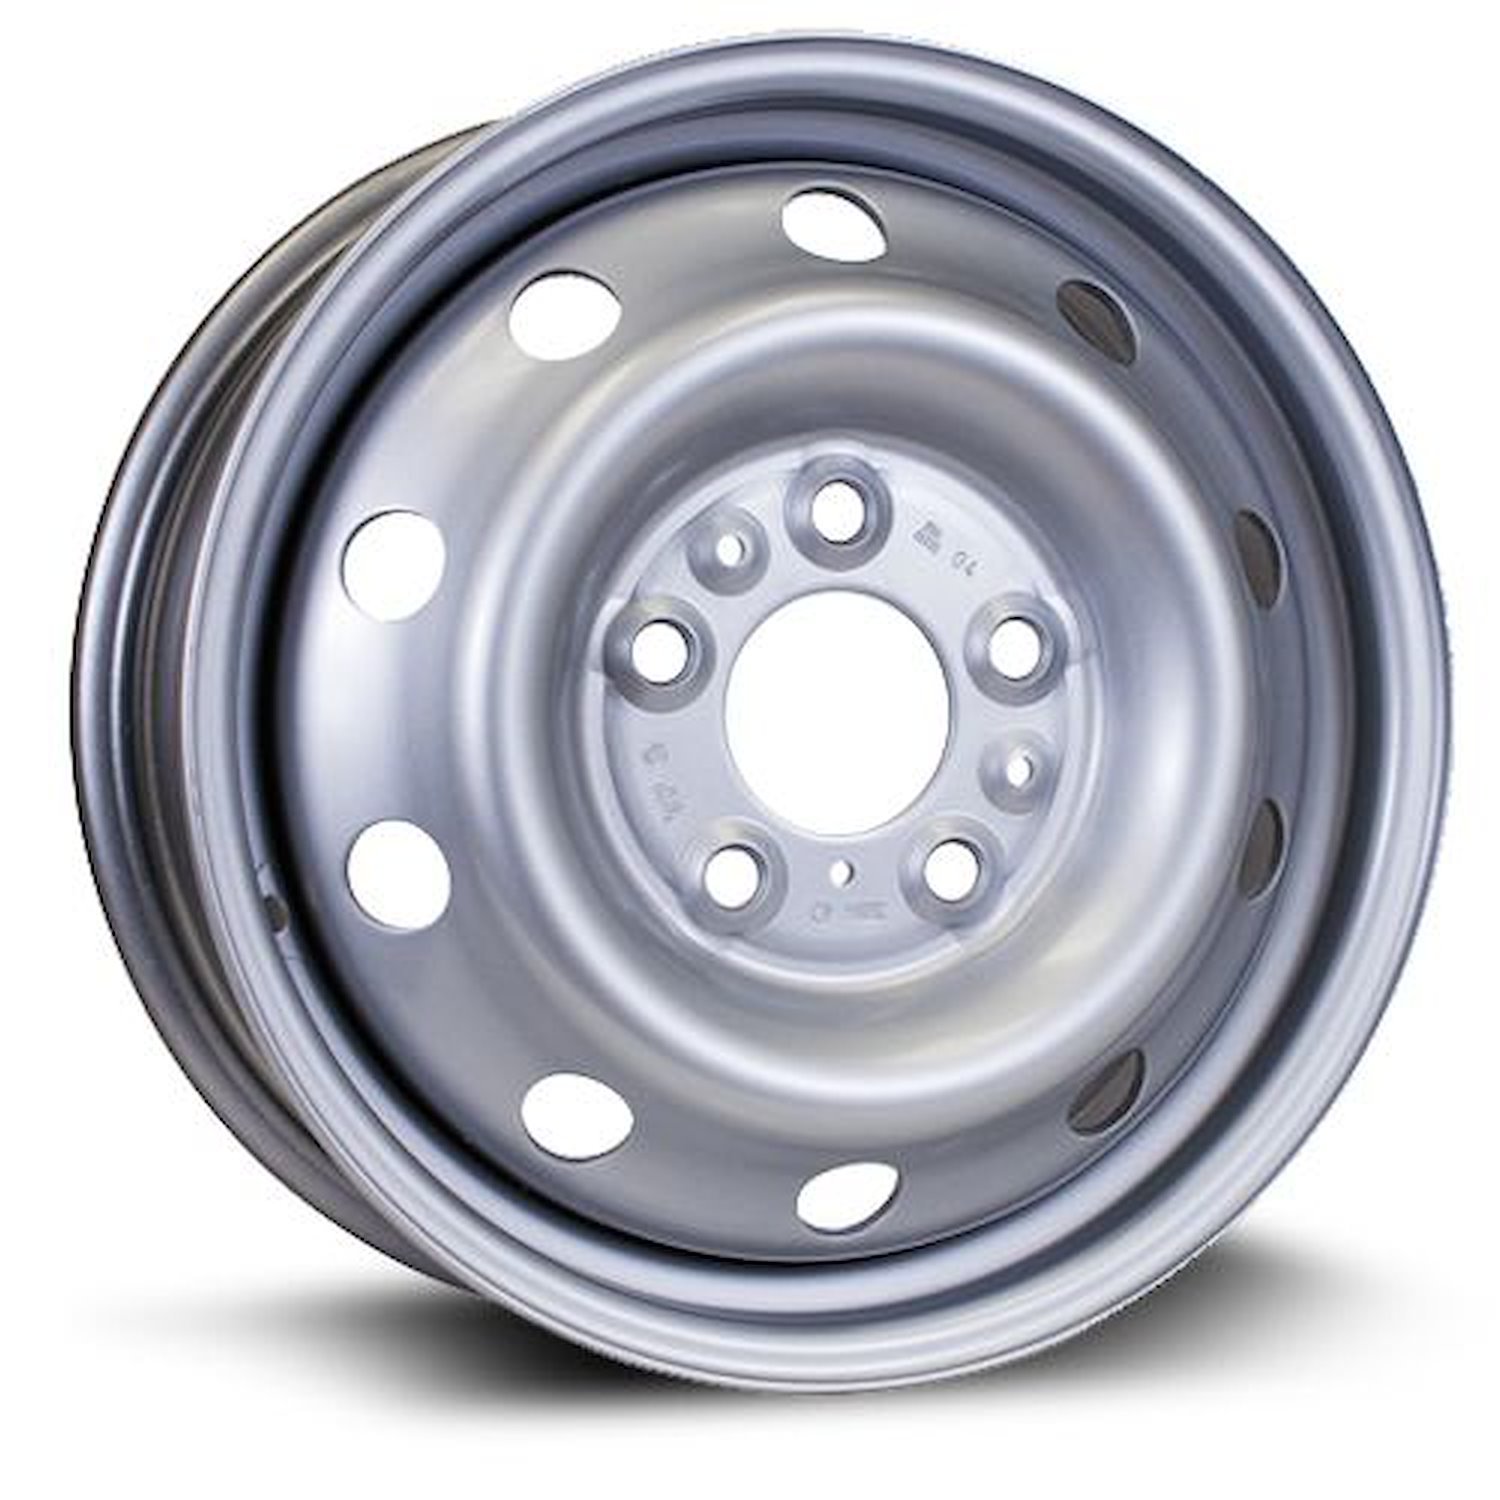 X46130 Steel Wheel [Size: 16" x 6"] Grey Finish